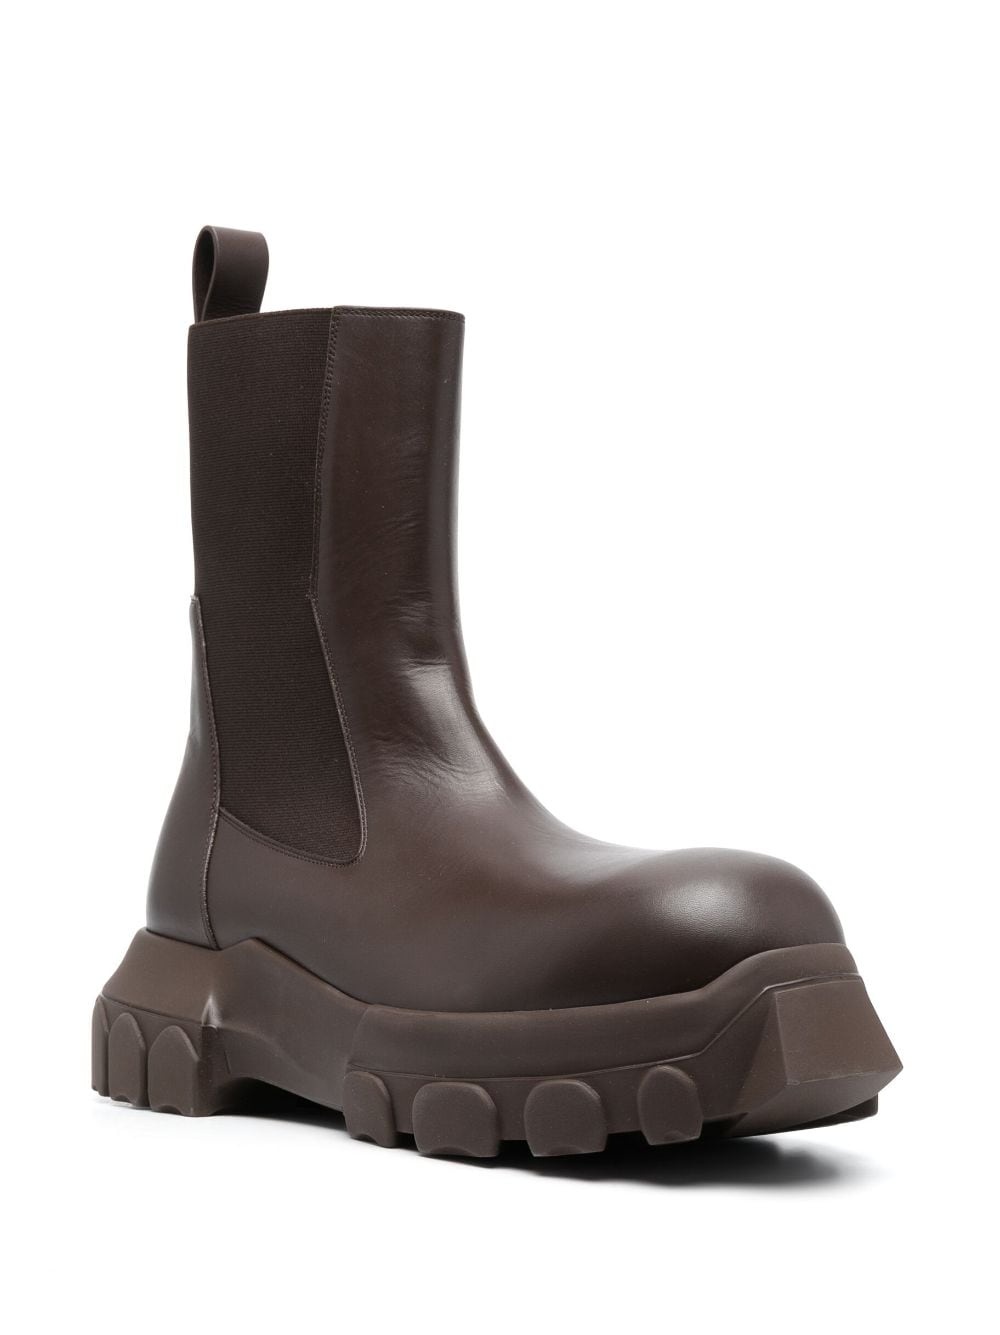 Edfu leather track boots - 2